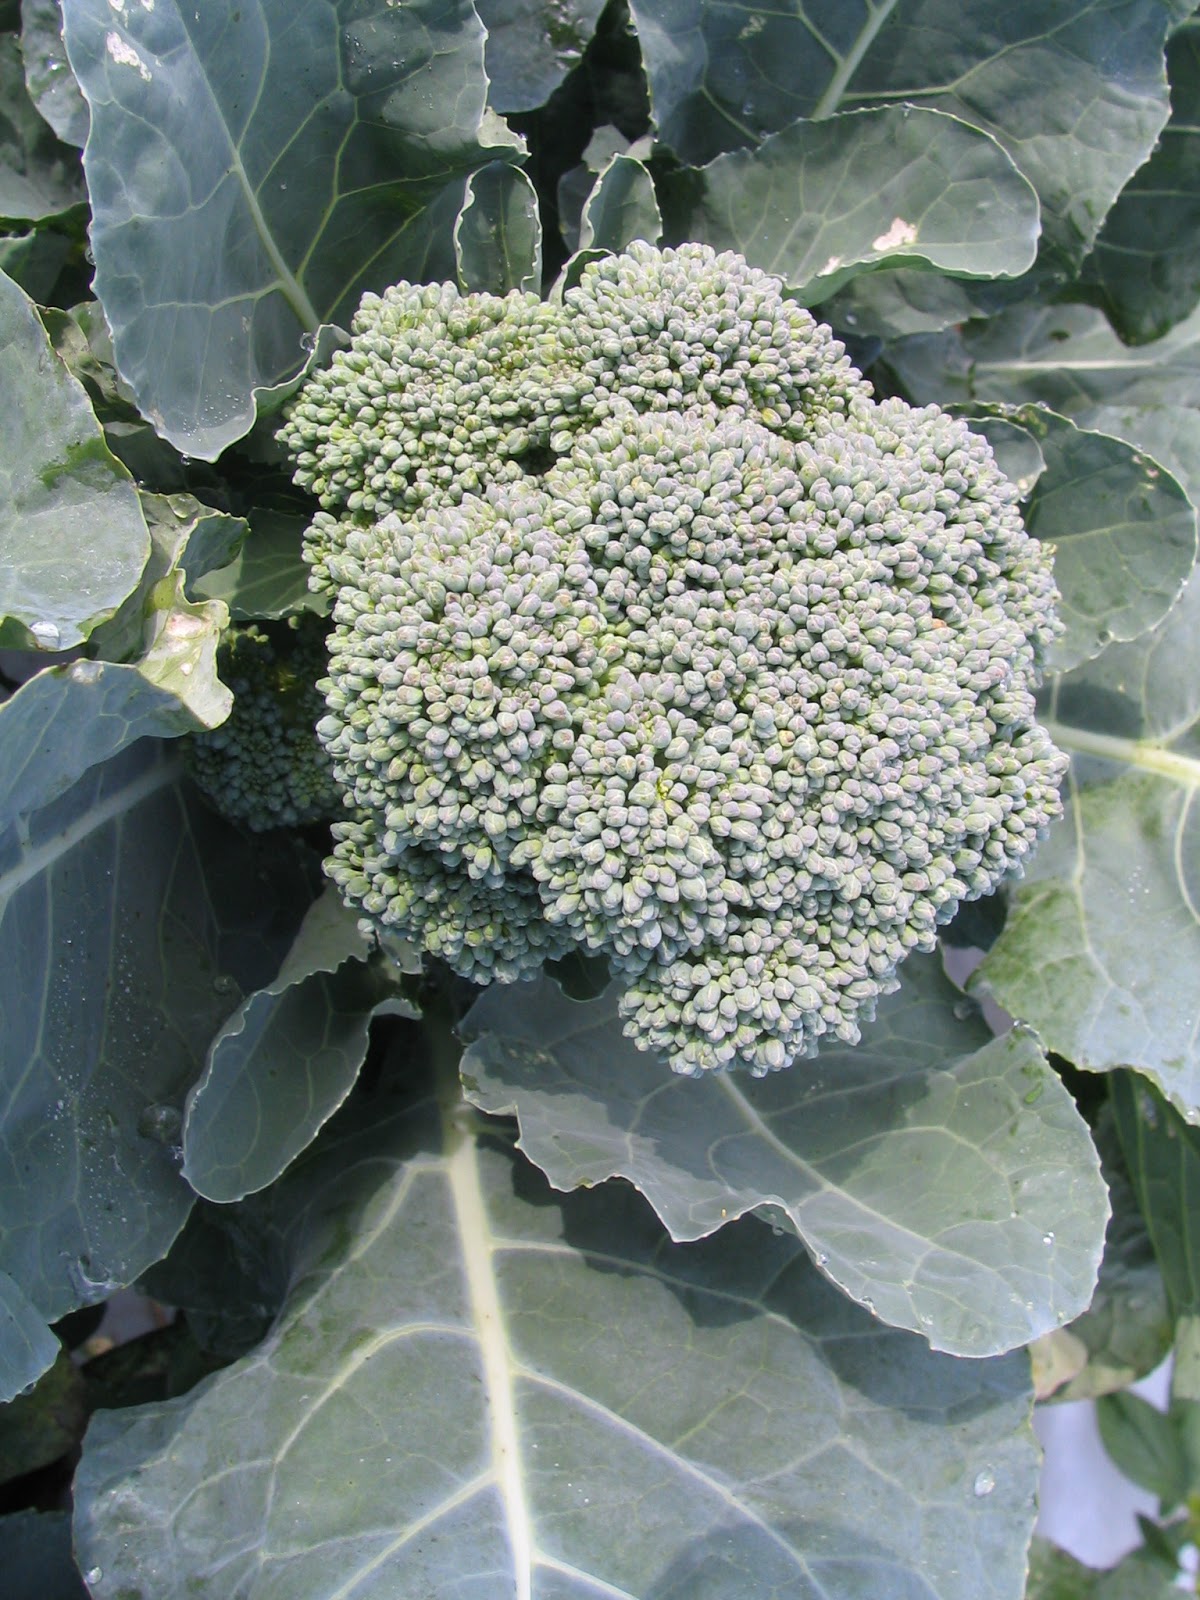 Atlantis broccoli grown in 2012